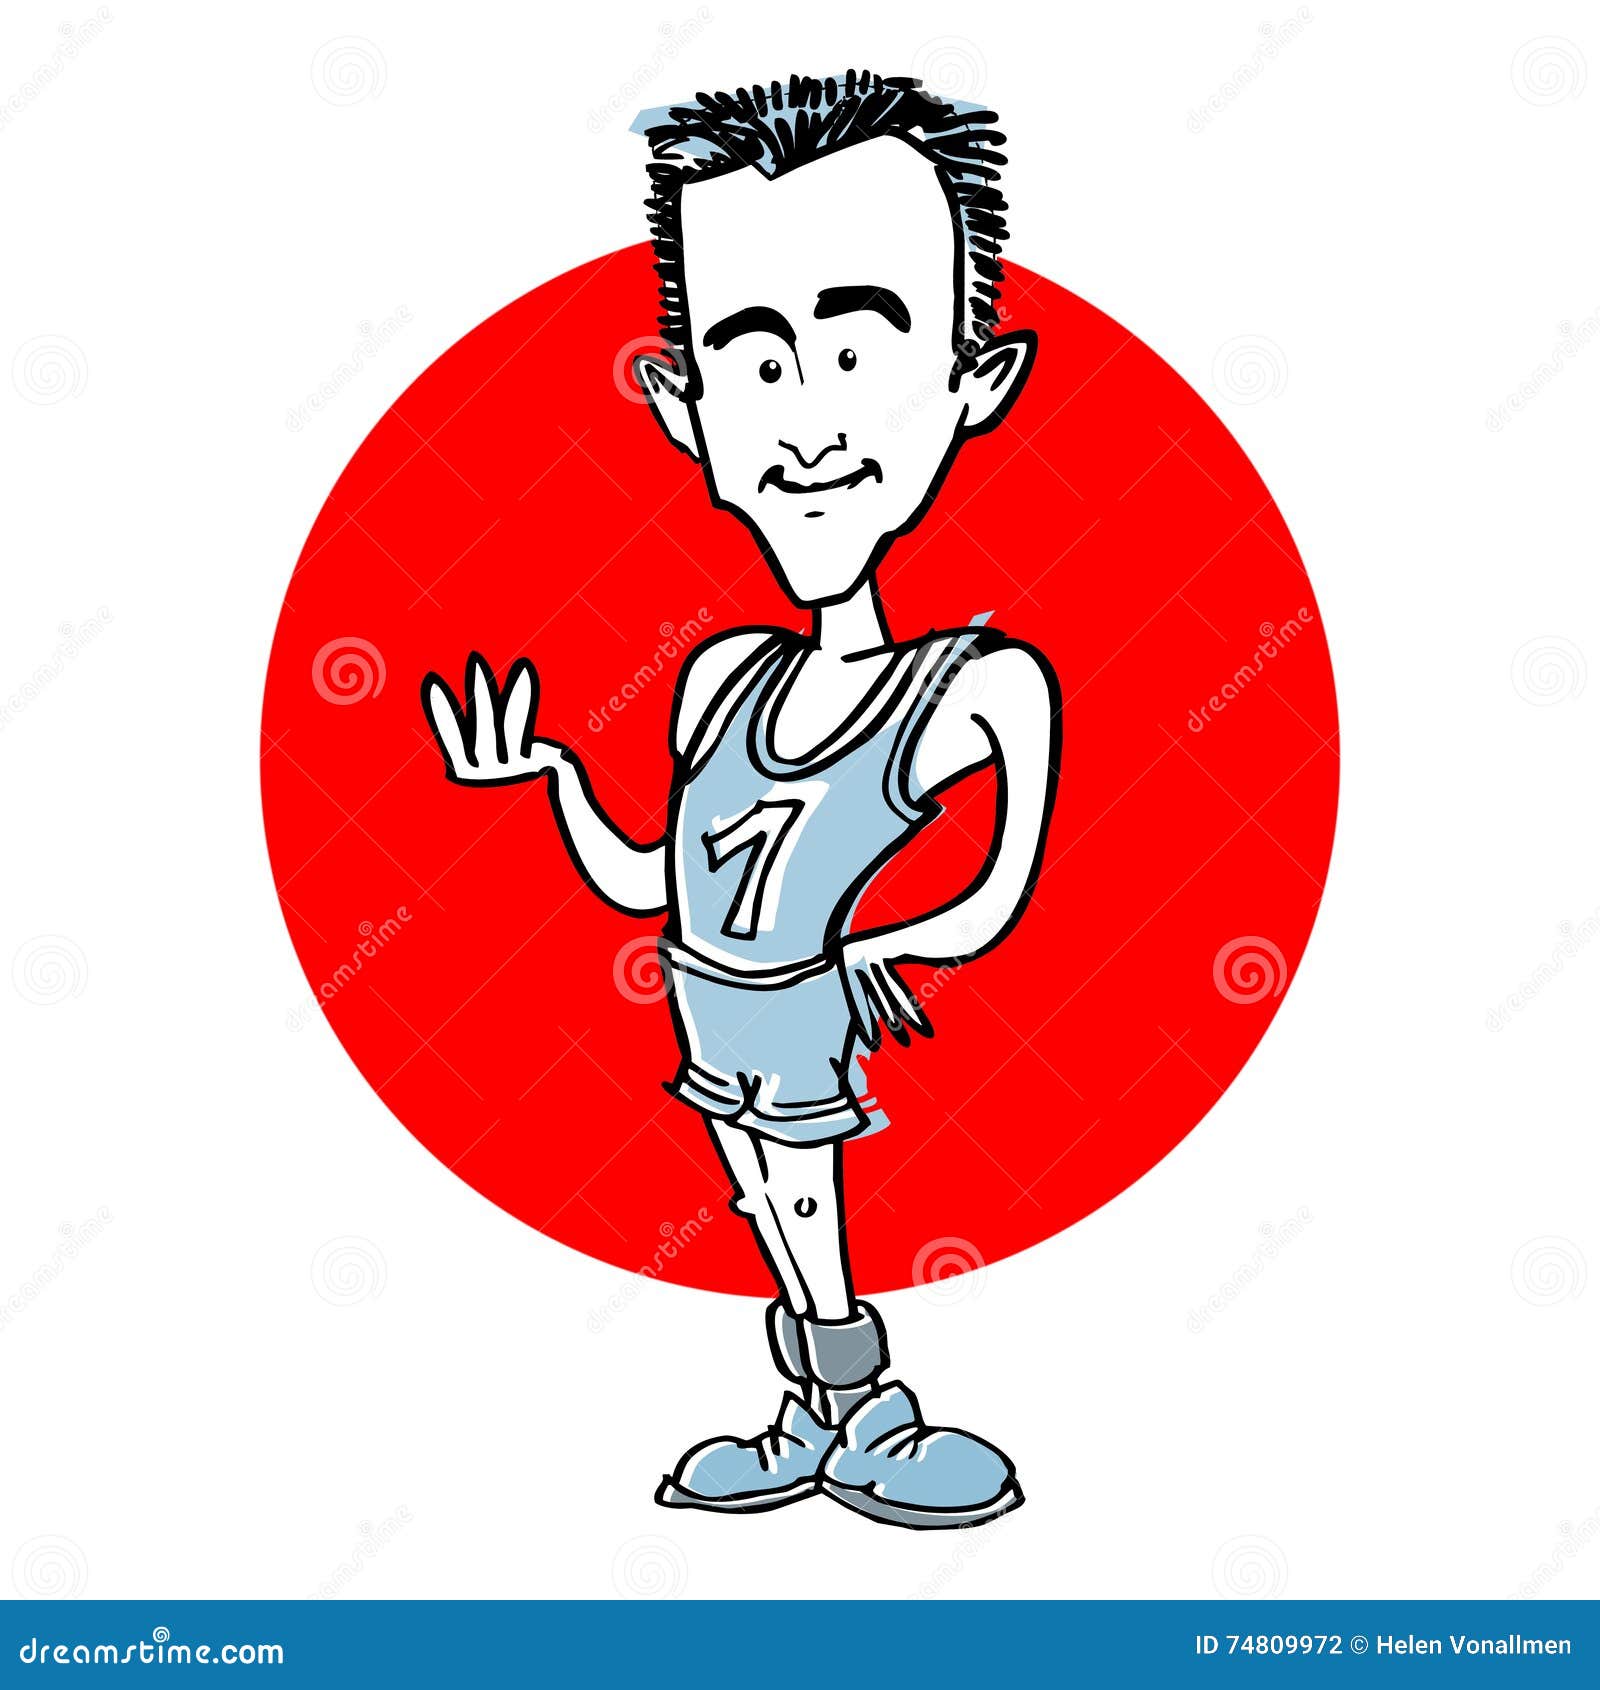 caricature of male runner athlete, cartoon